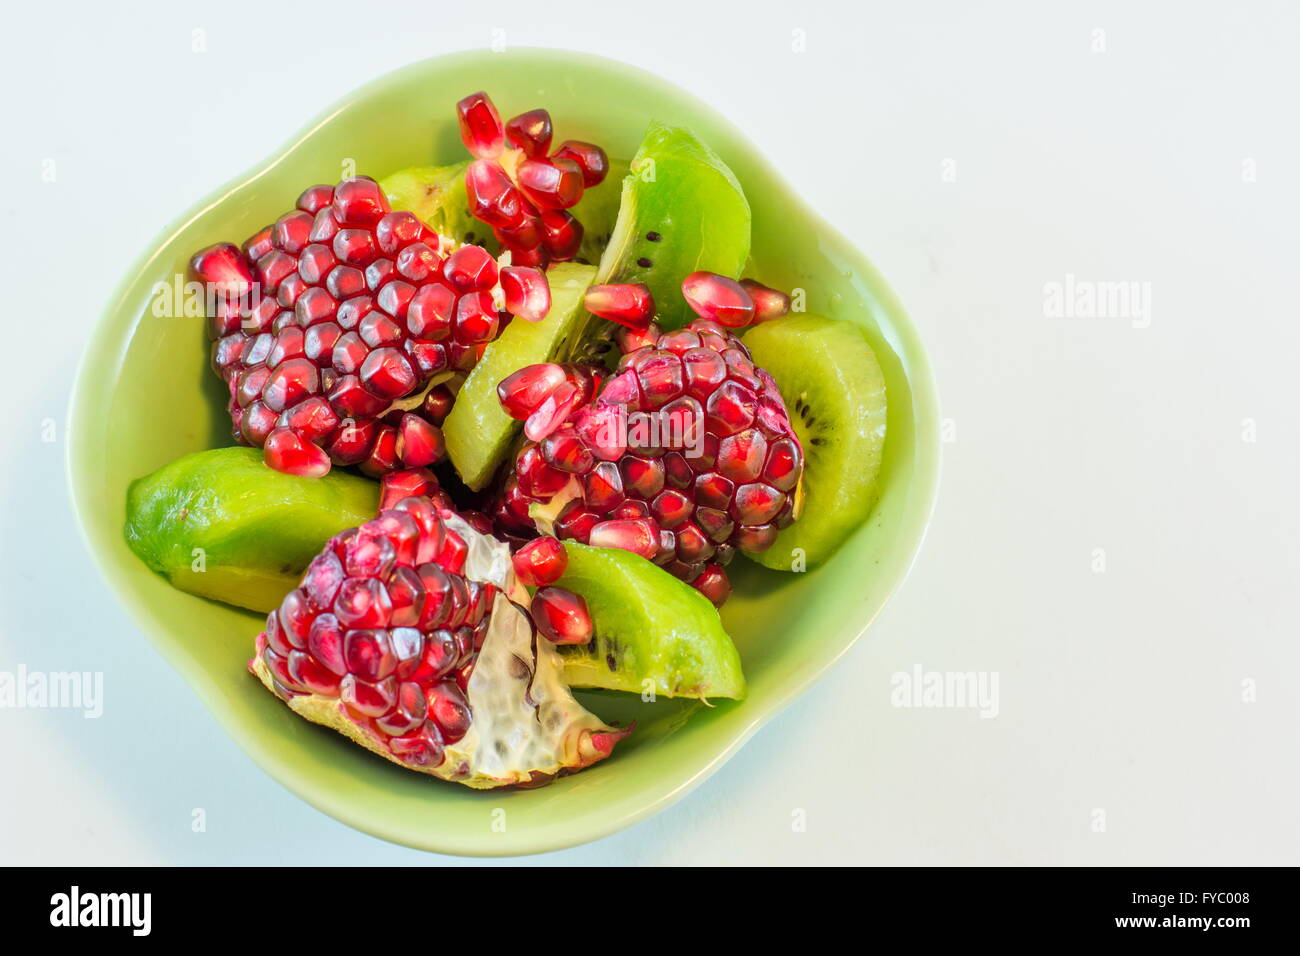 sliced pomegranate and kiwi on a plate Stock Photo